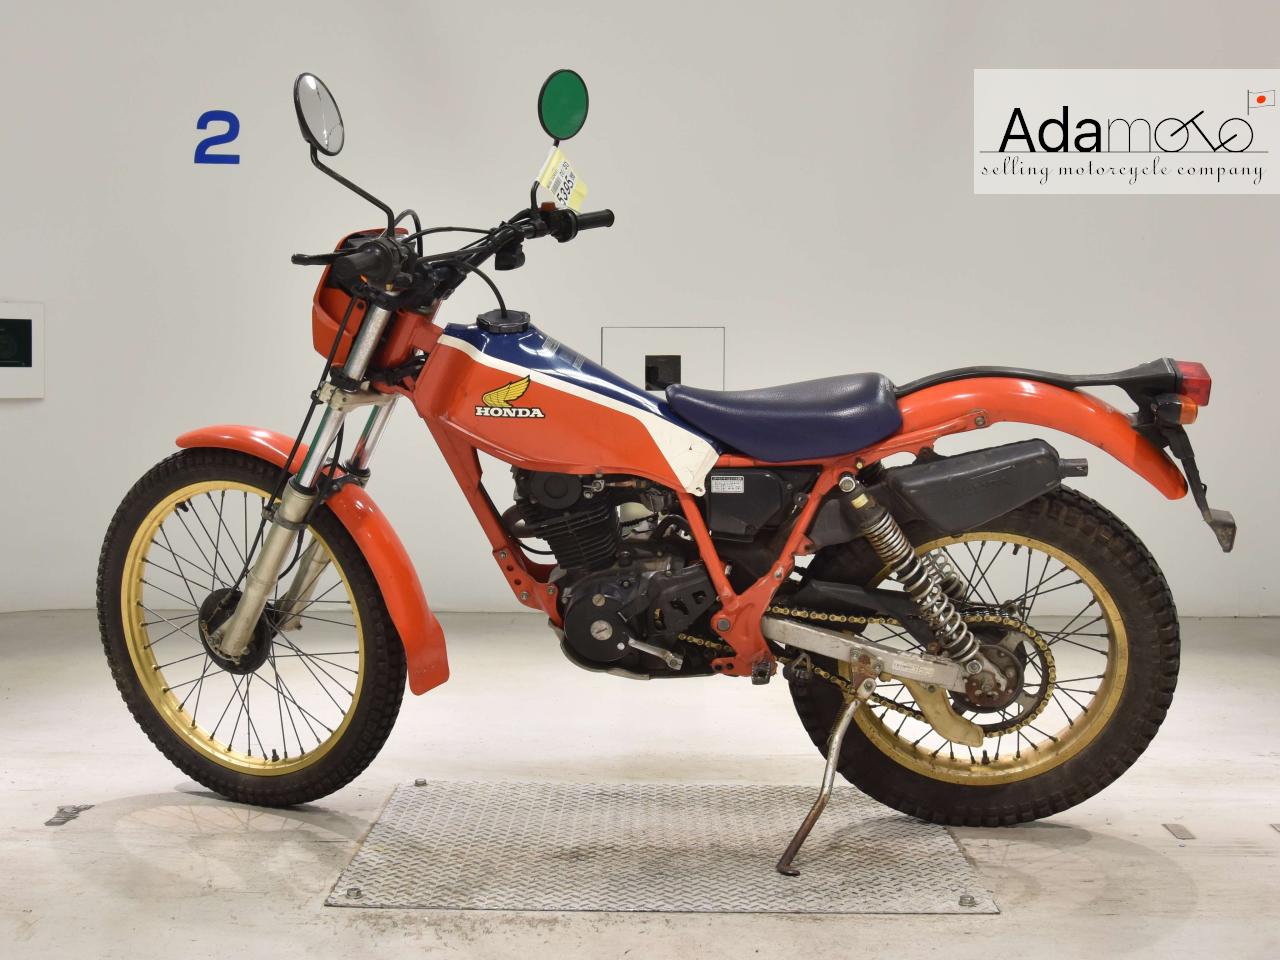 Honda TLR200 - Adamoto - Motorcycles from Japan